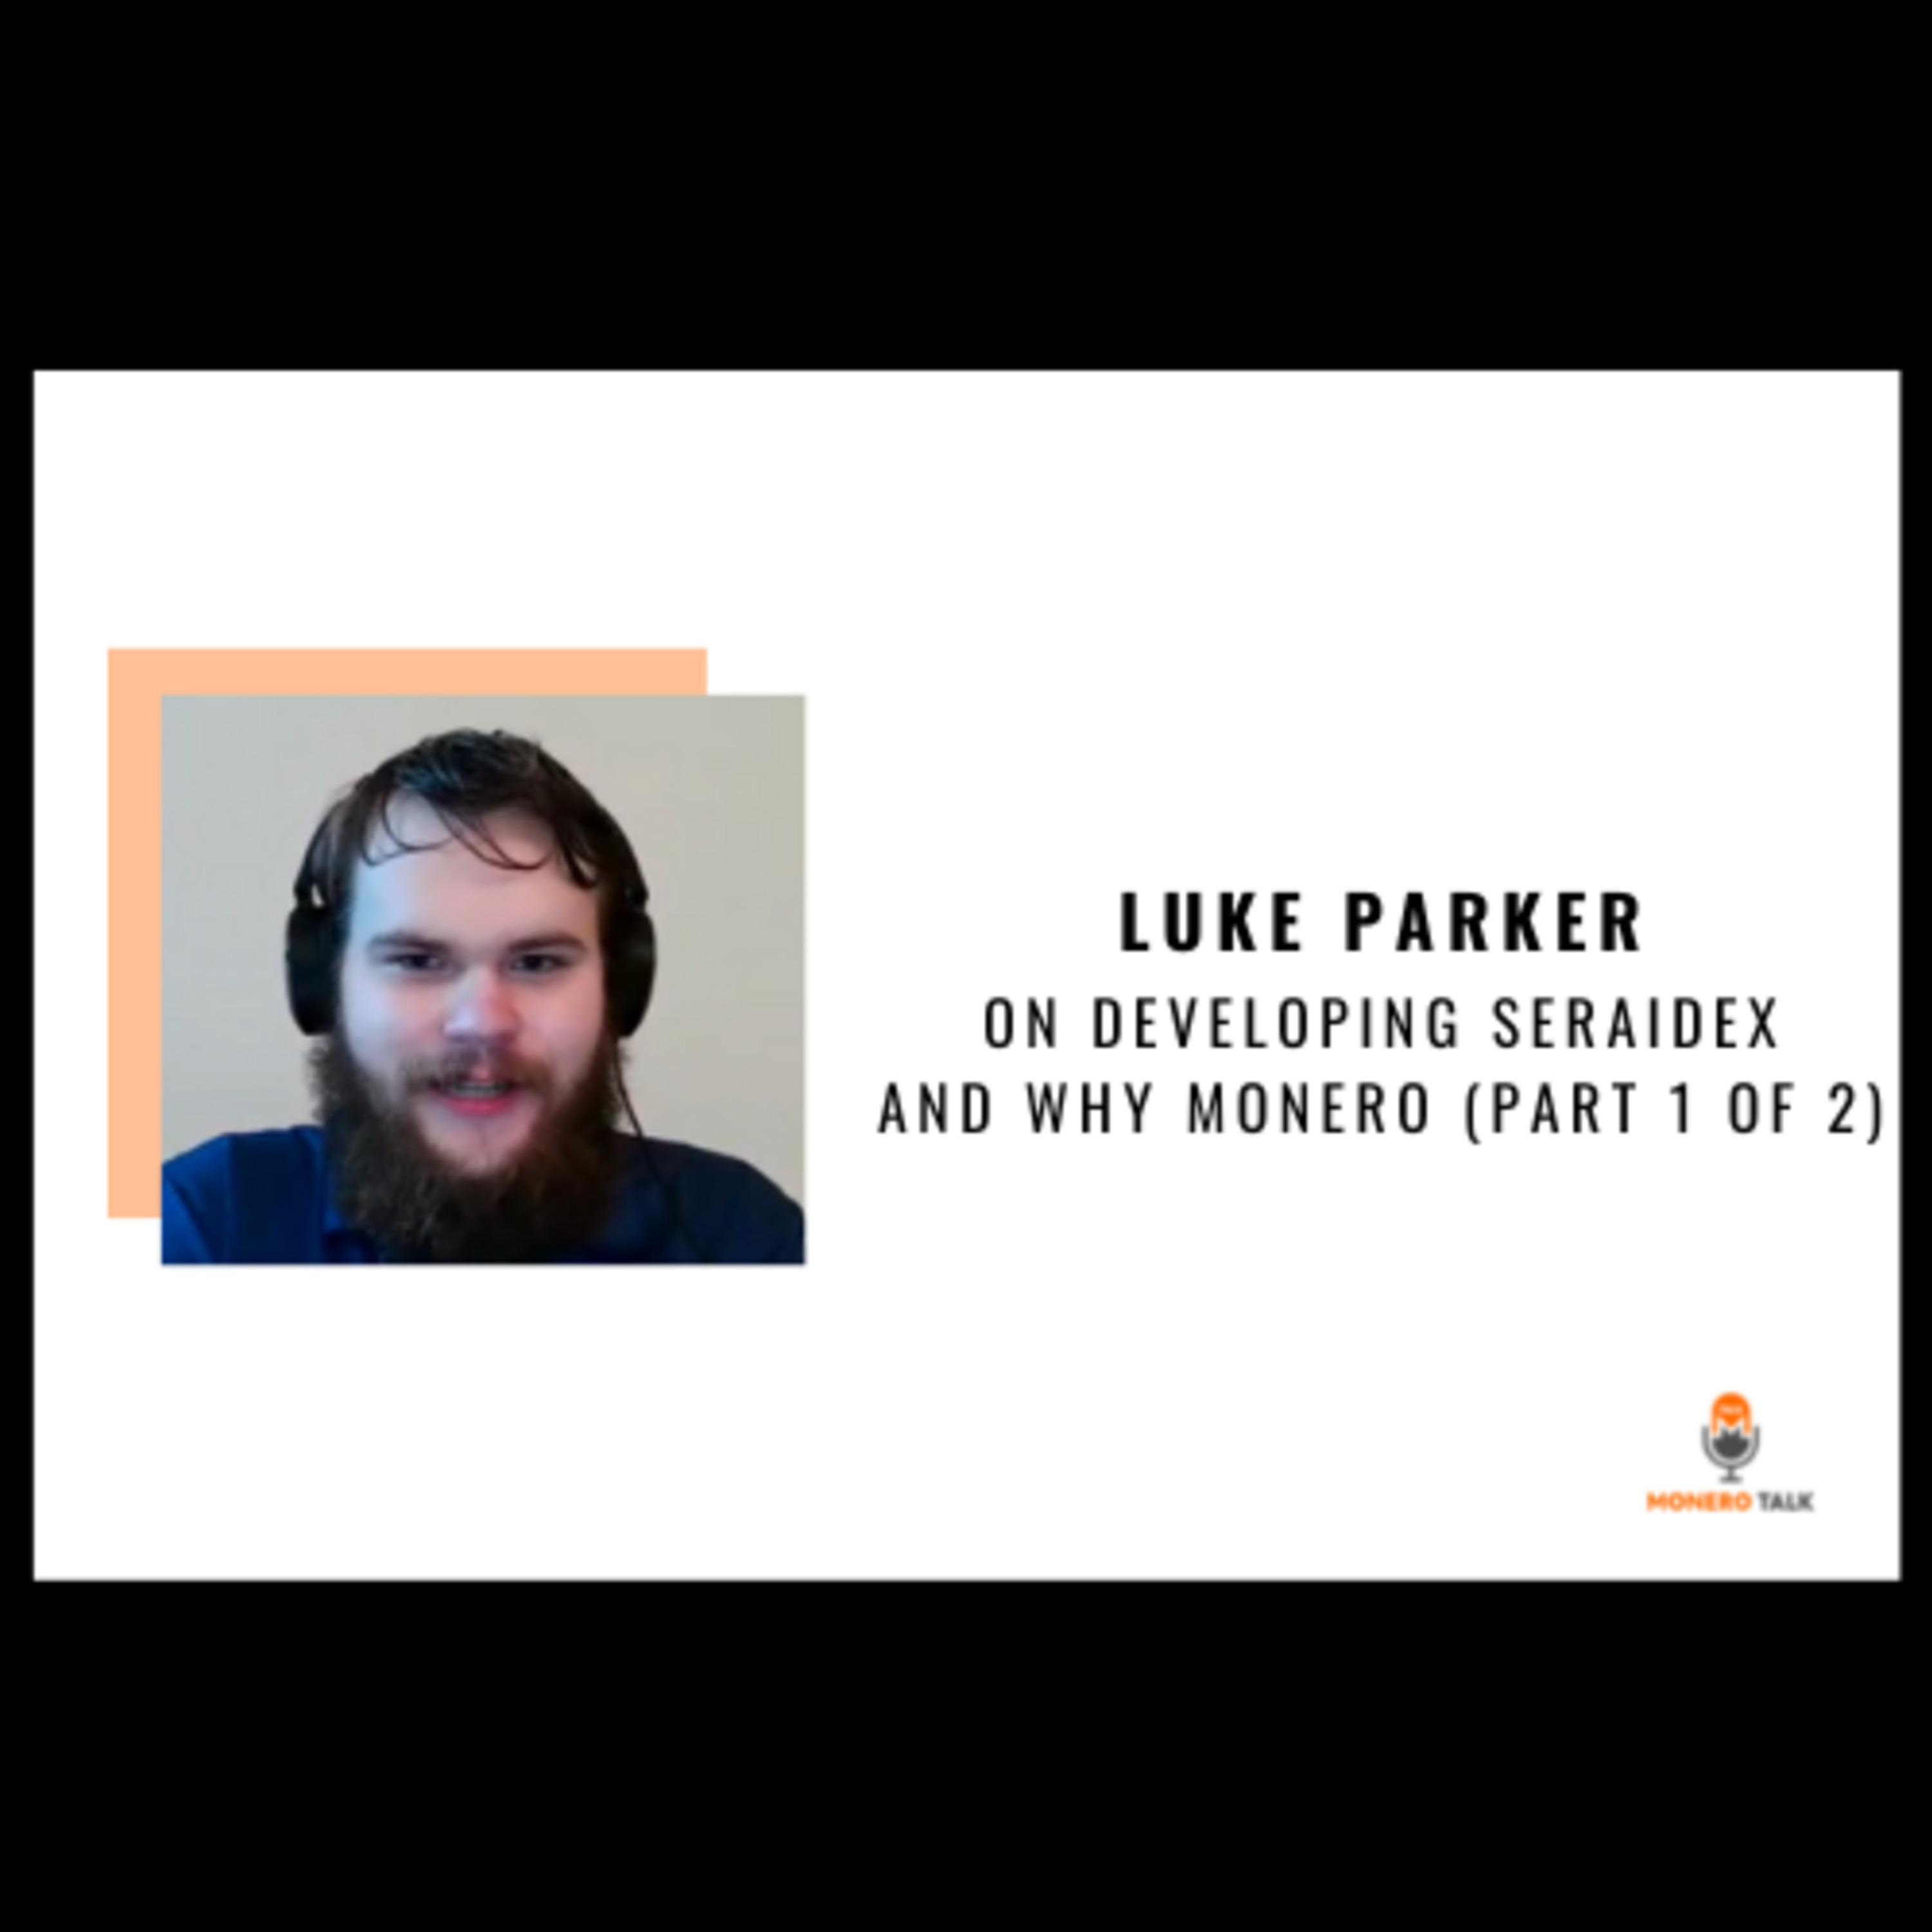 Luke Parker on developing SeraiDEX and why Monero (Part 1 of 2)